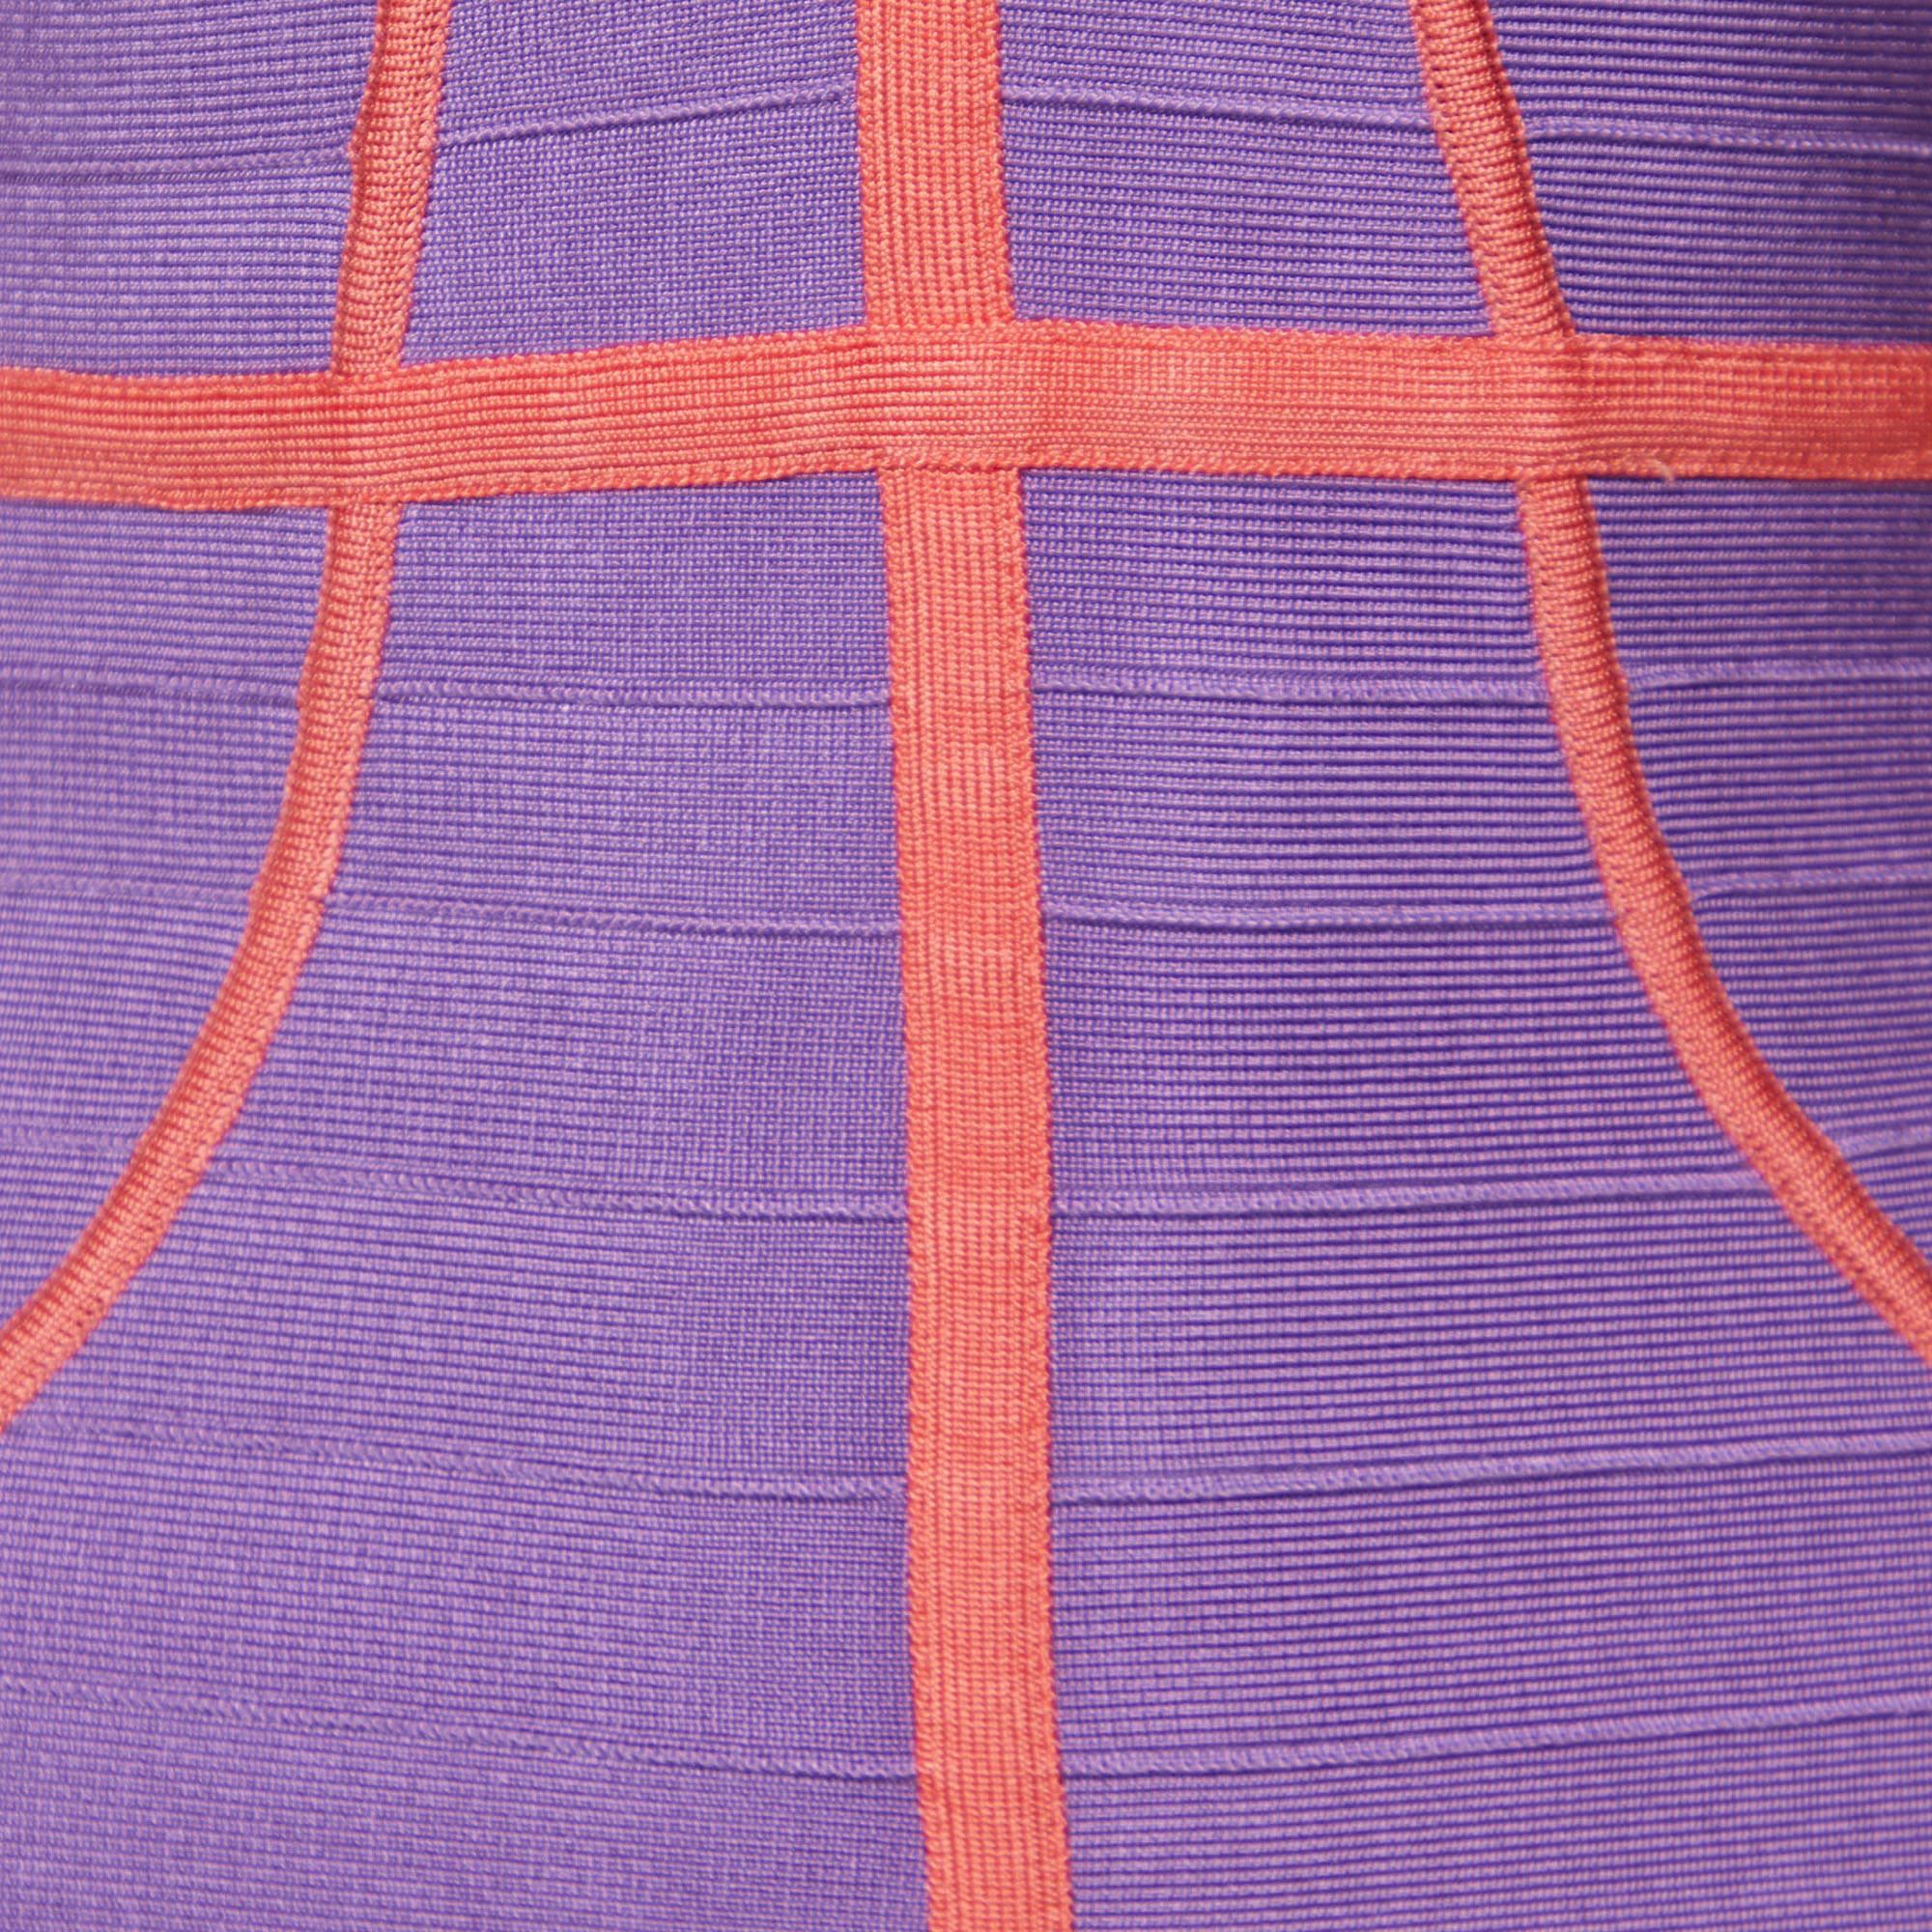 Herve Leger Violet/Coral Knit Sleeveless Bandage Dress XS In Excellent Condition For Sale In Dubai, Al Qouz 2